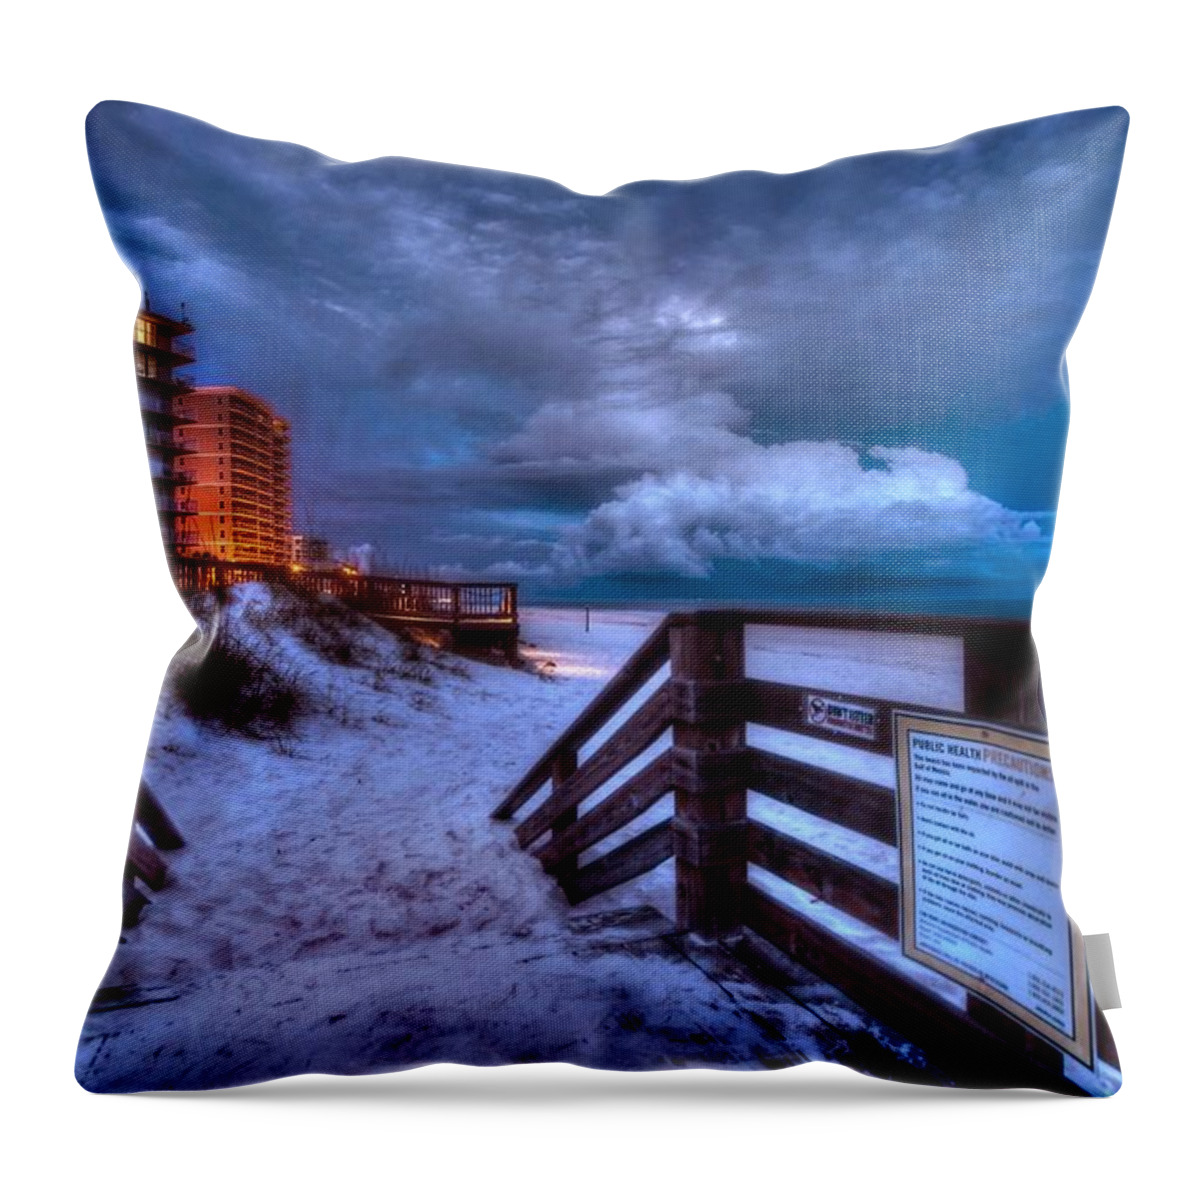 Alabama Throw Pillow featuring the digital art Romar Beach Clouds by Michael Thomas